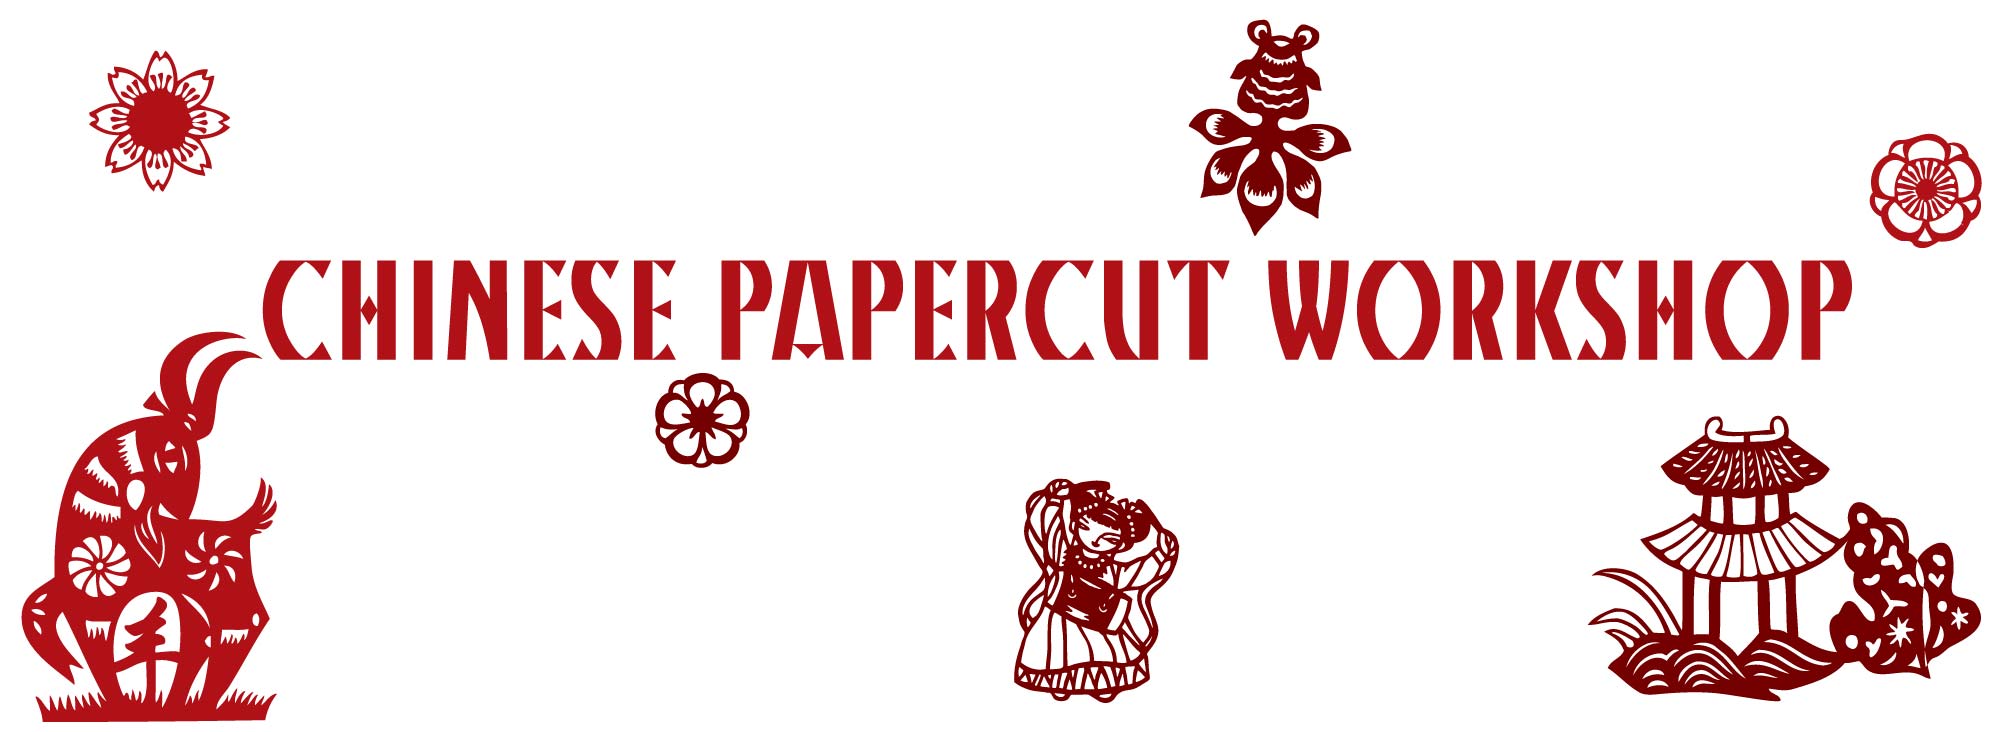 Chinese Papercut Workshop